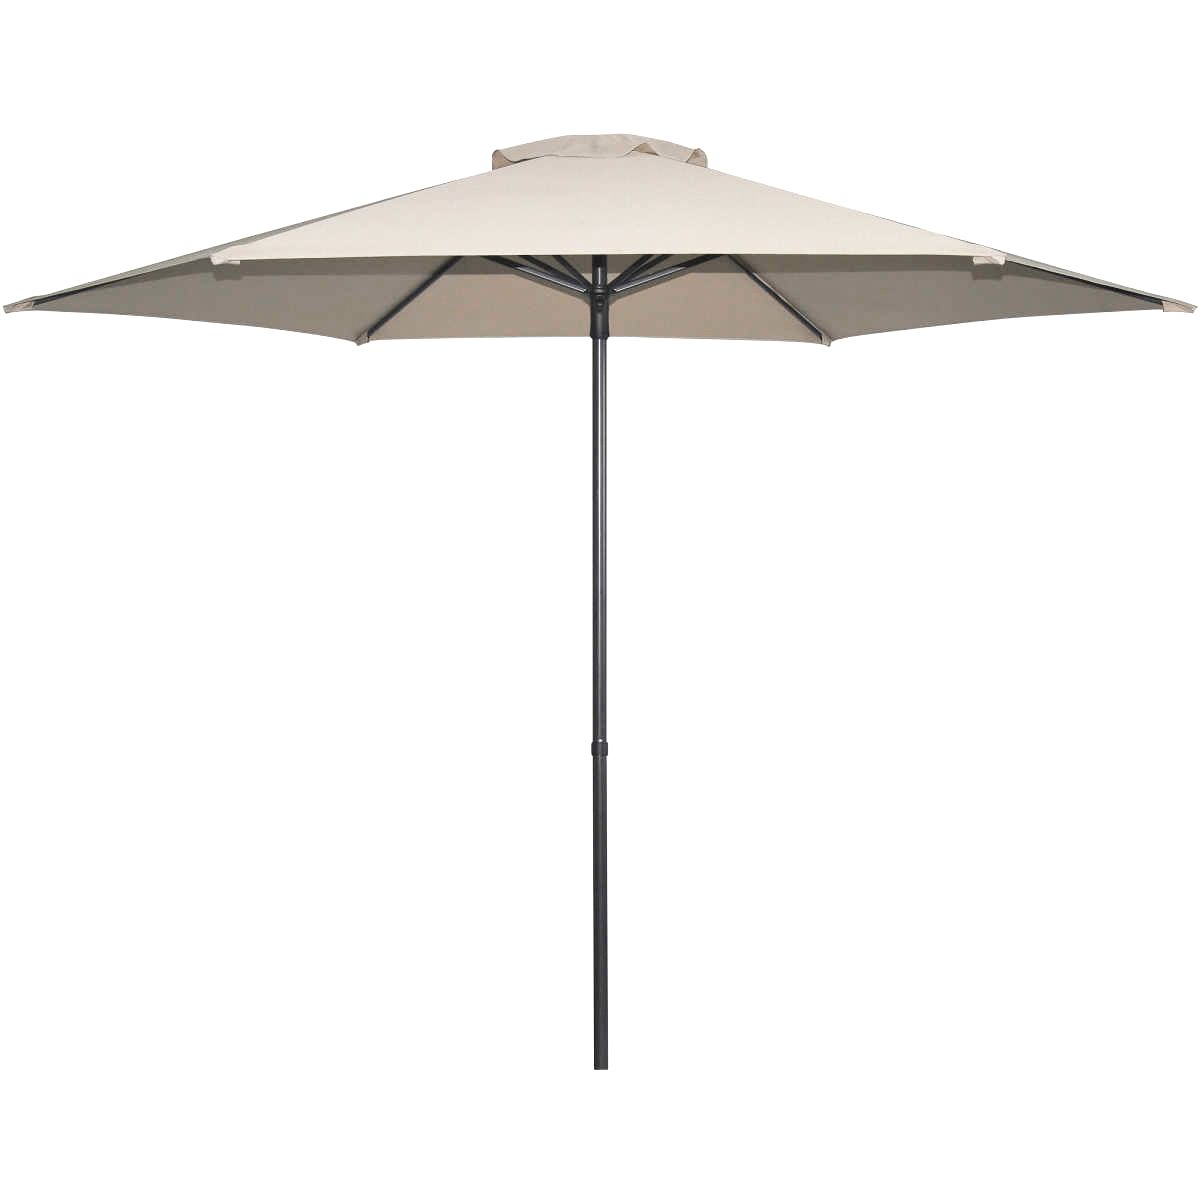 Most Recently Released Market Umbrella Regarding Market Umbrellas (View 4 of 20)